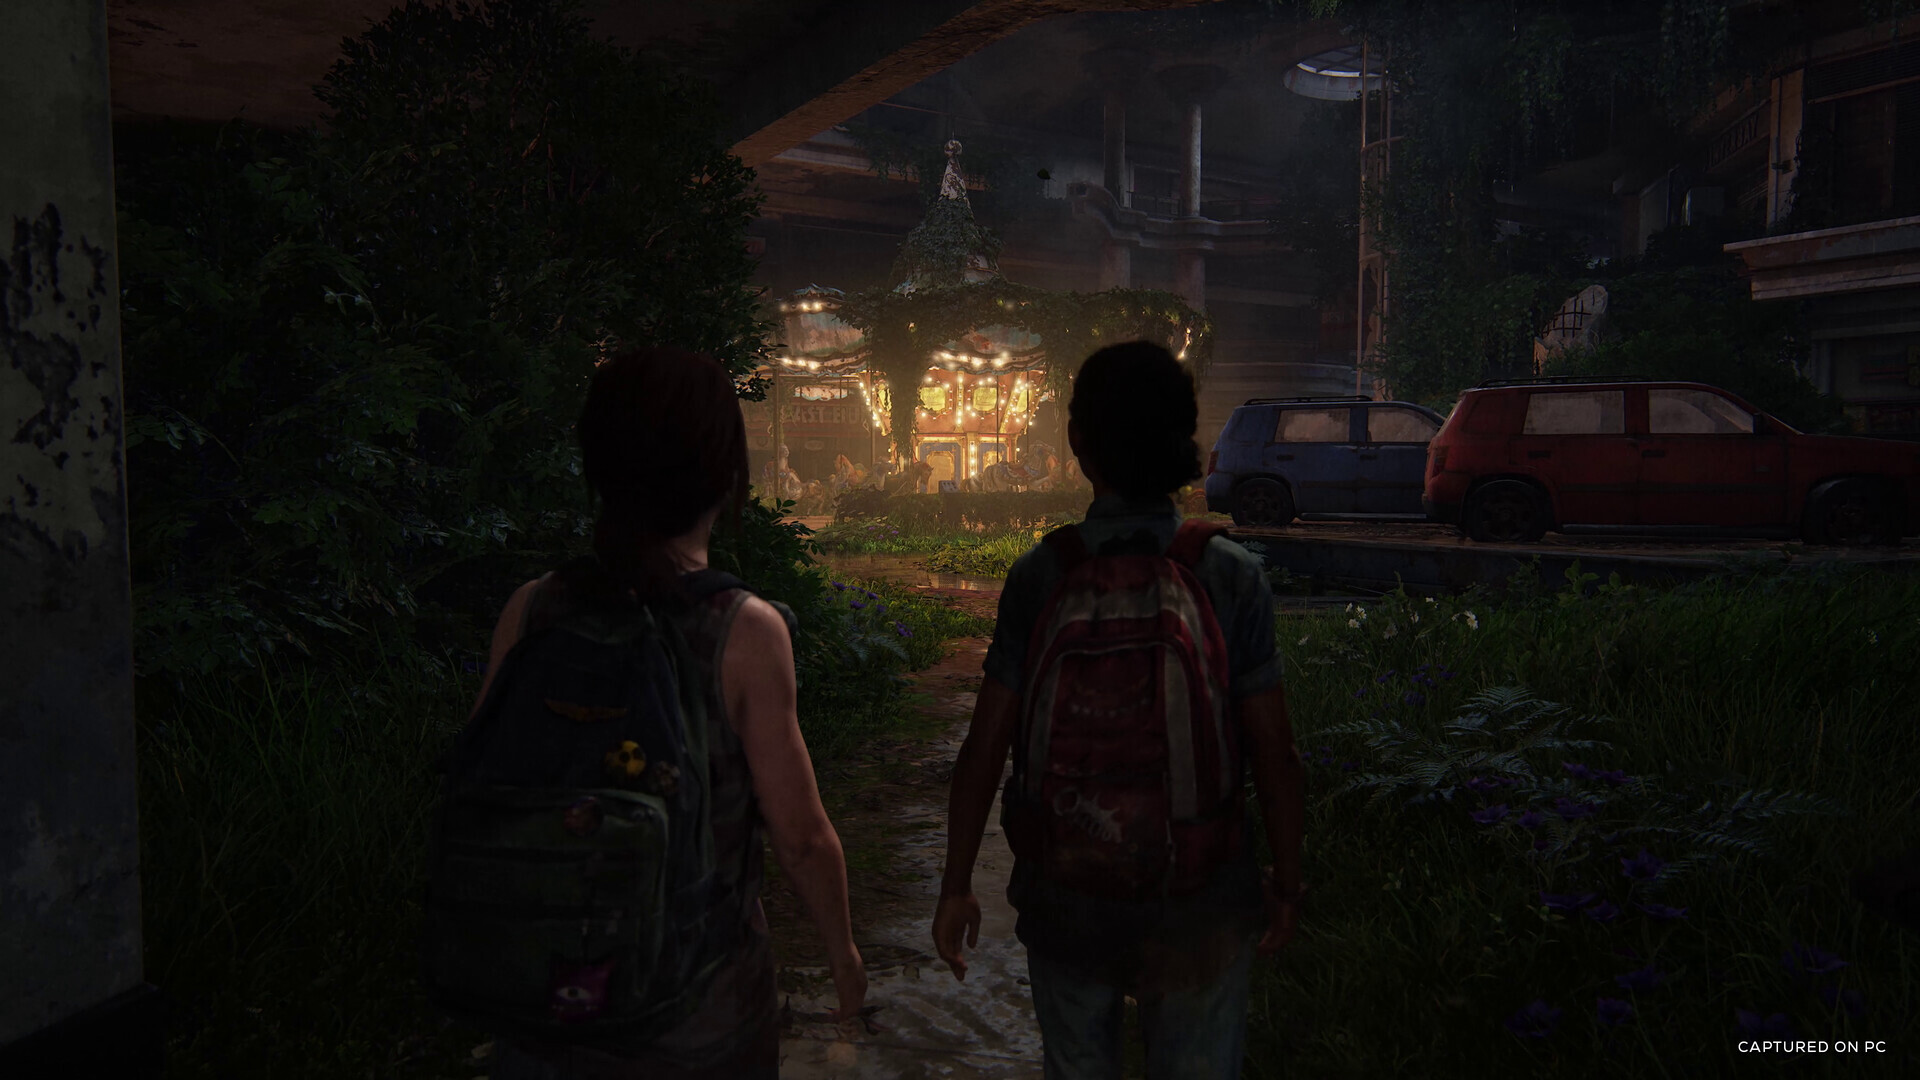 Buy The Last of Us Part I Cd Key Steam Global